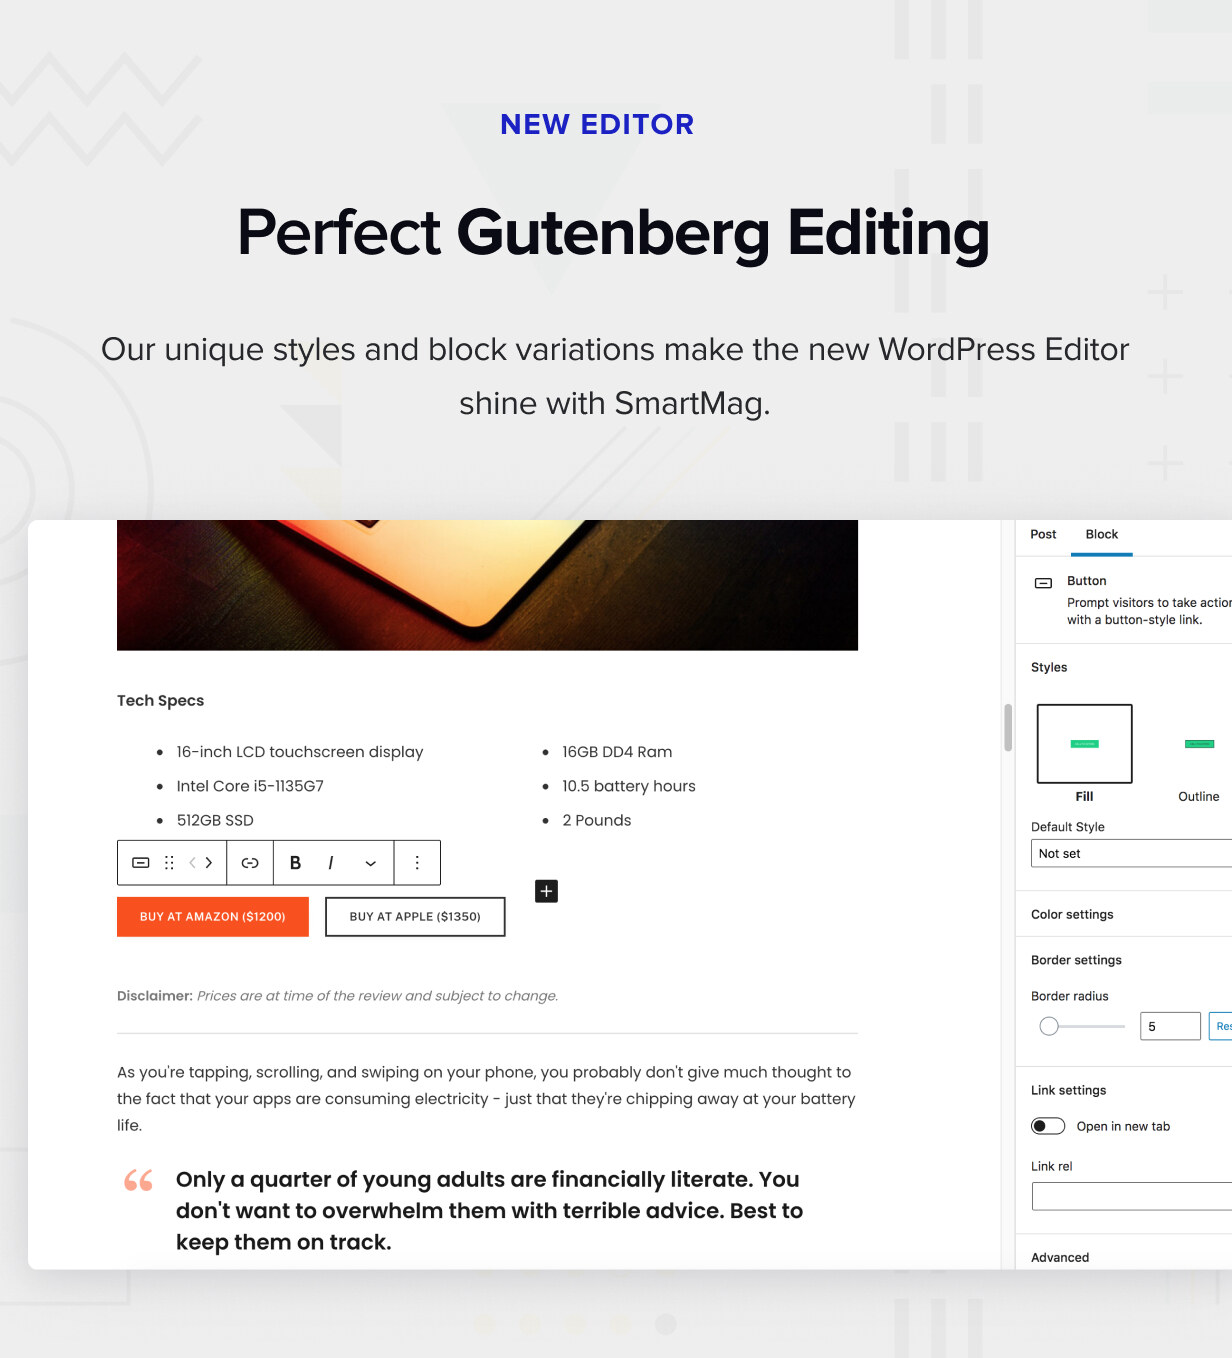 Gutenberg Optimized